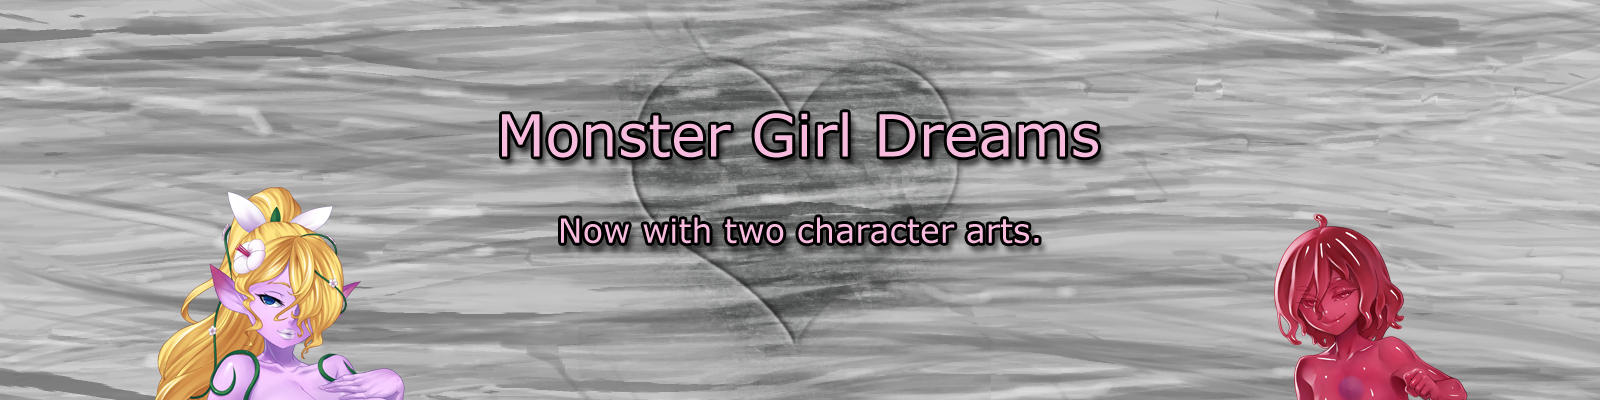 Threshold - Monster Girl Dreams Alpha version 15.1